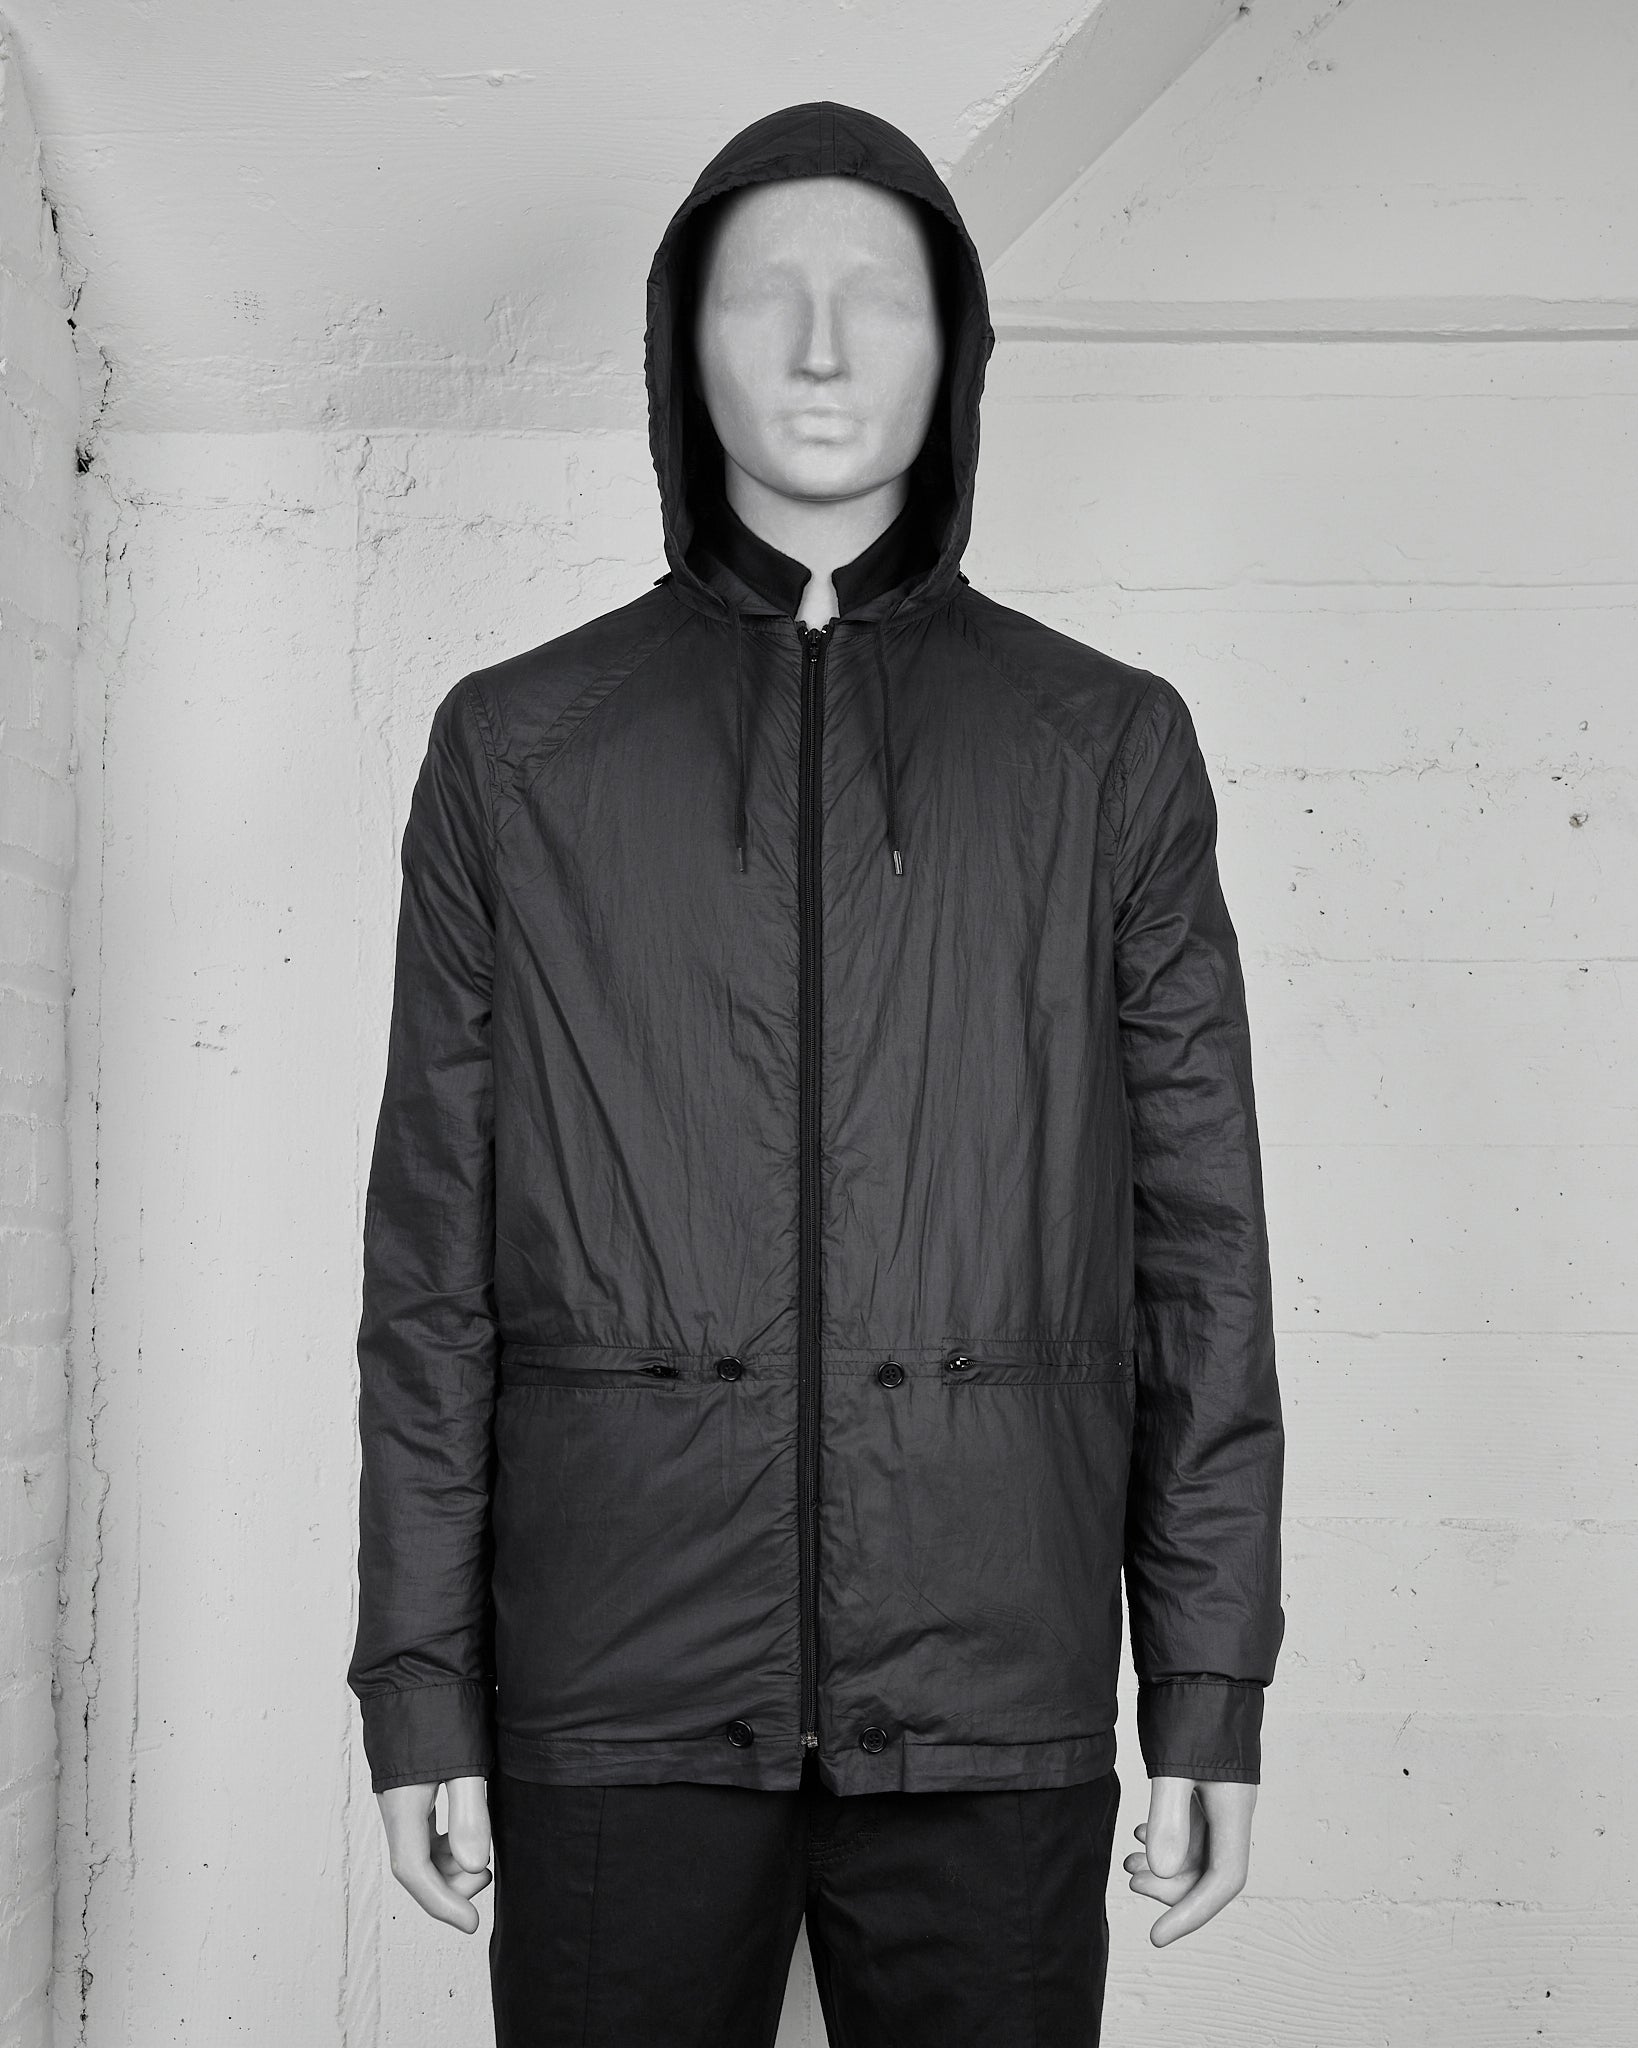 Hussein Chalayan Reversible Jacket - AW05 "In Shadows" interior jacket photo